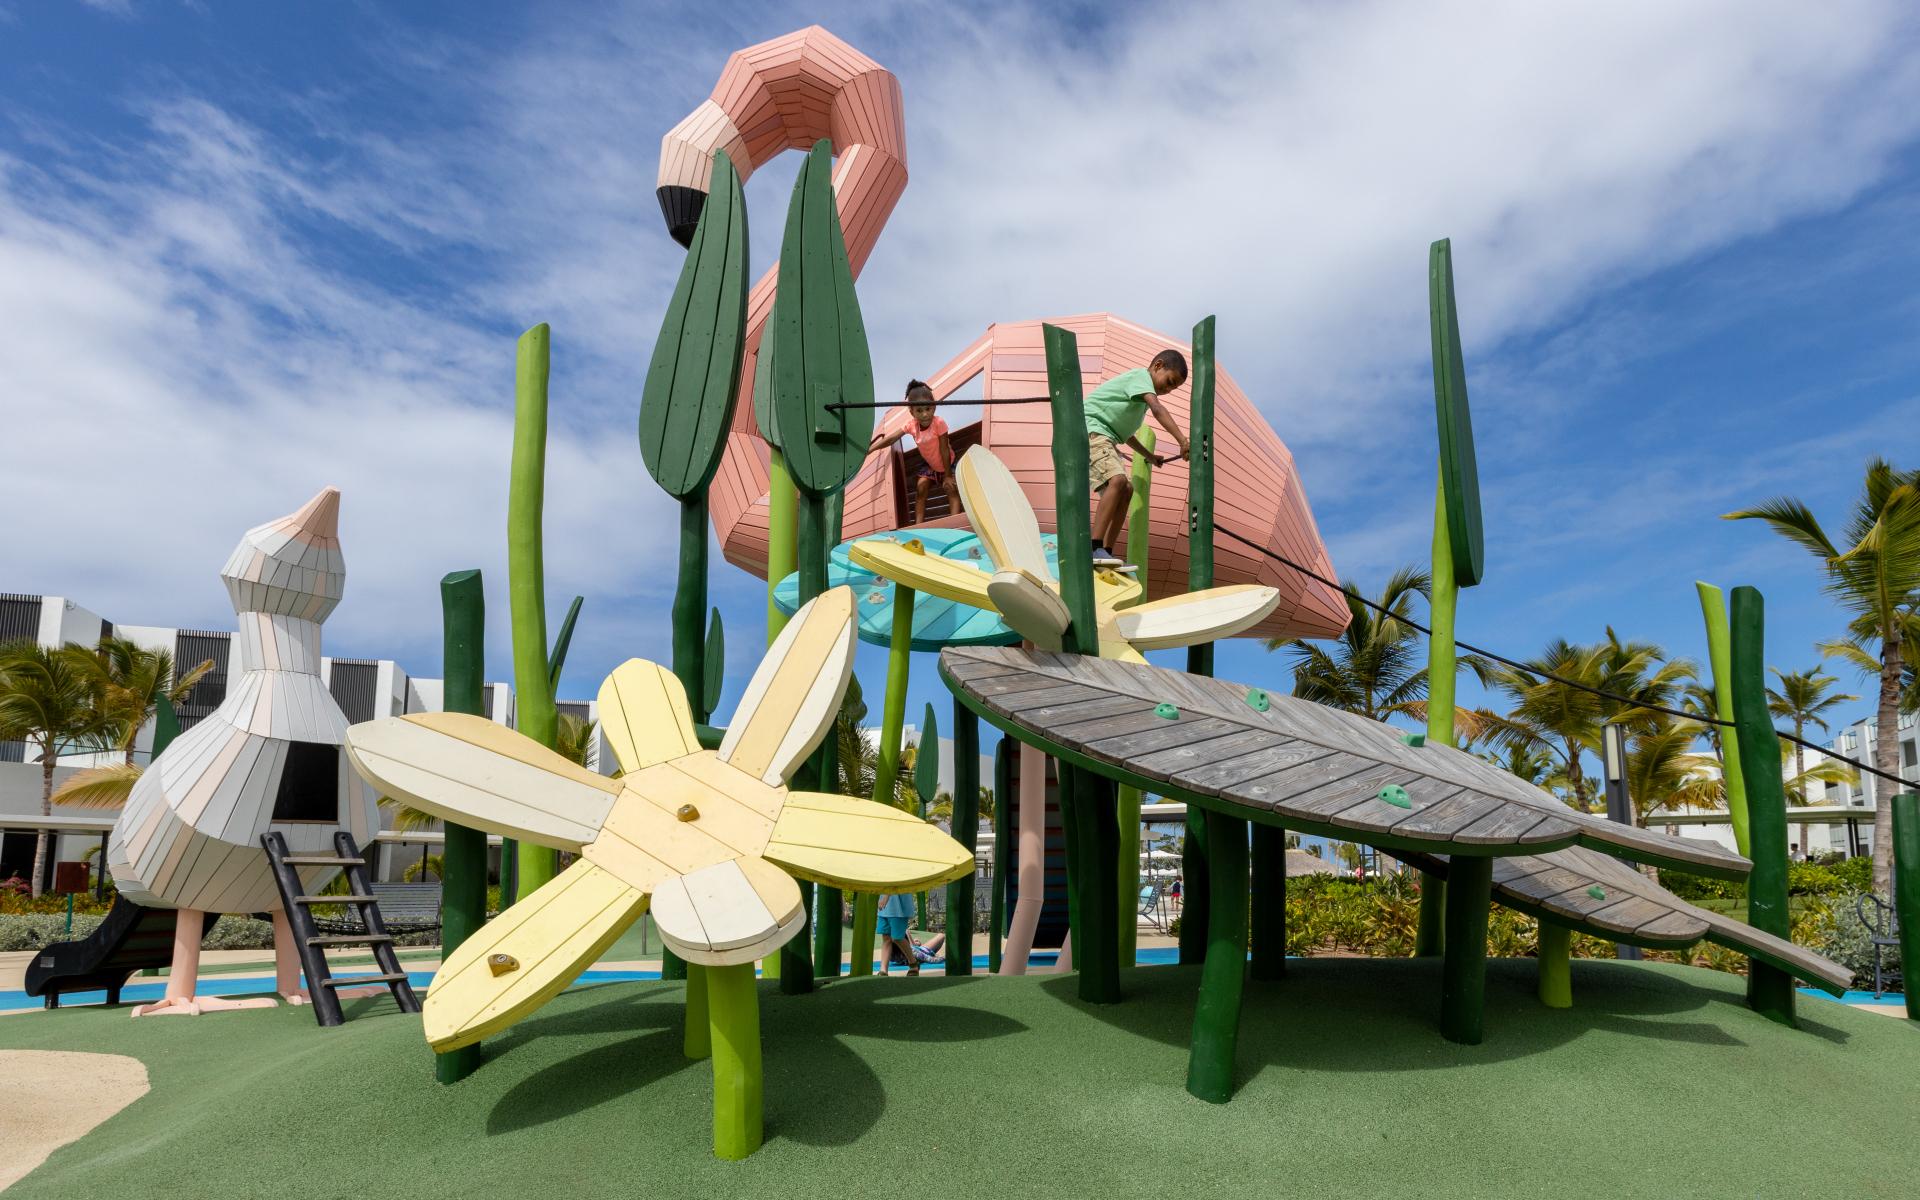 Flamingo playground with kids playing